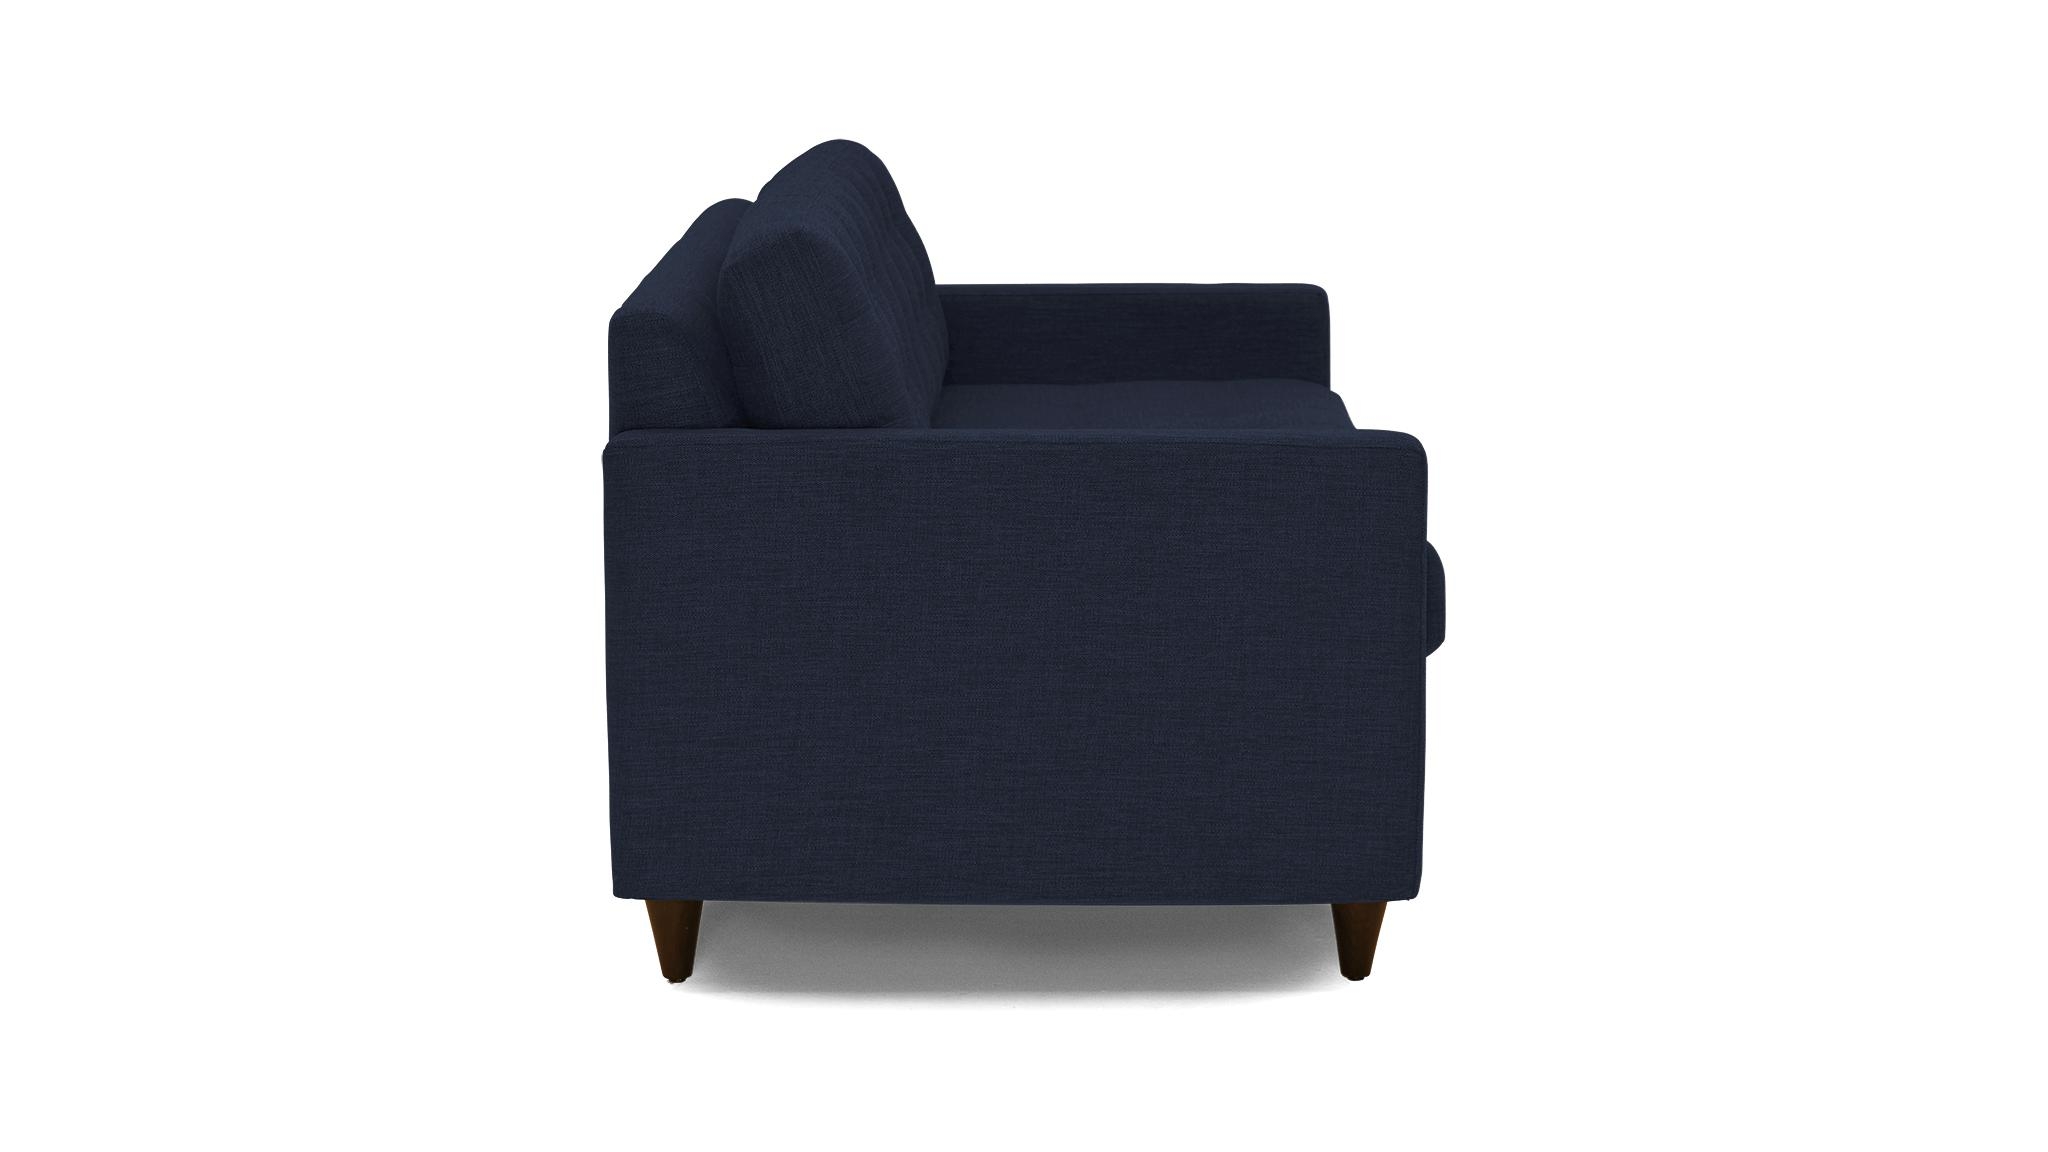 Blue Eliot Mid Century Modern Sleeper Sofa - Sunbrella Premier Indigo - Mocha - Foam - Image 2